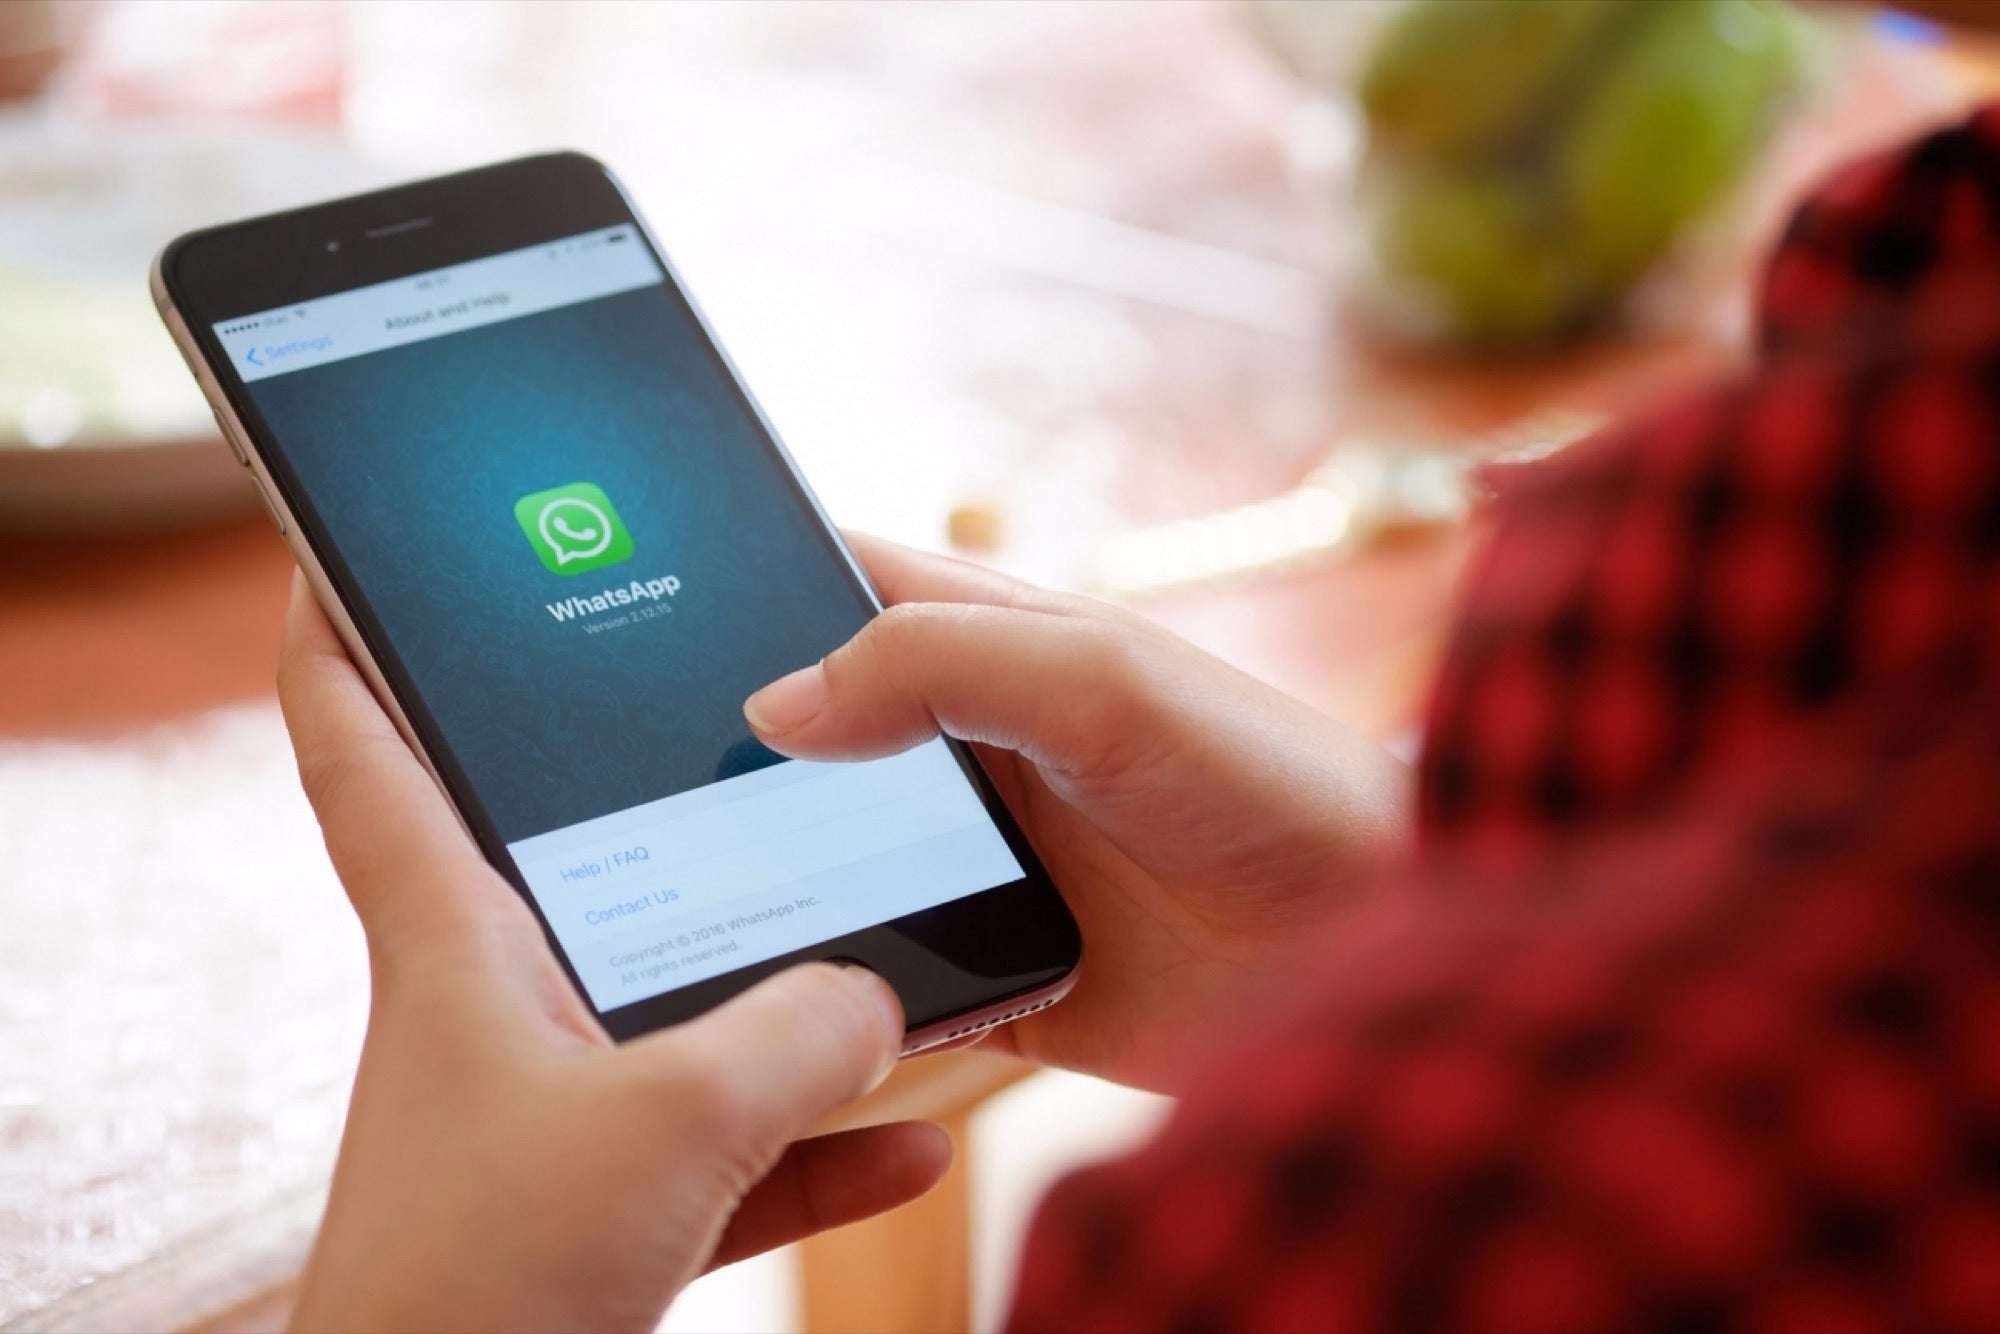 How to create a fake WhatsApp conversation?